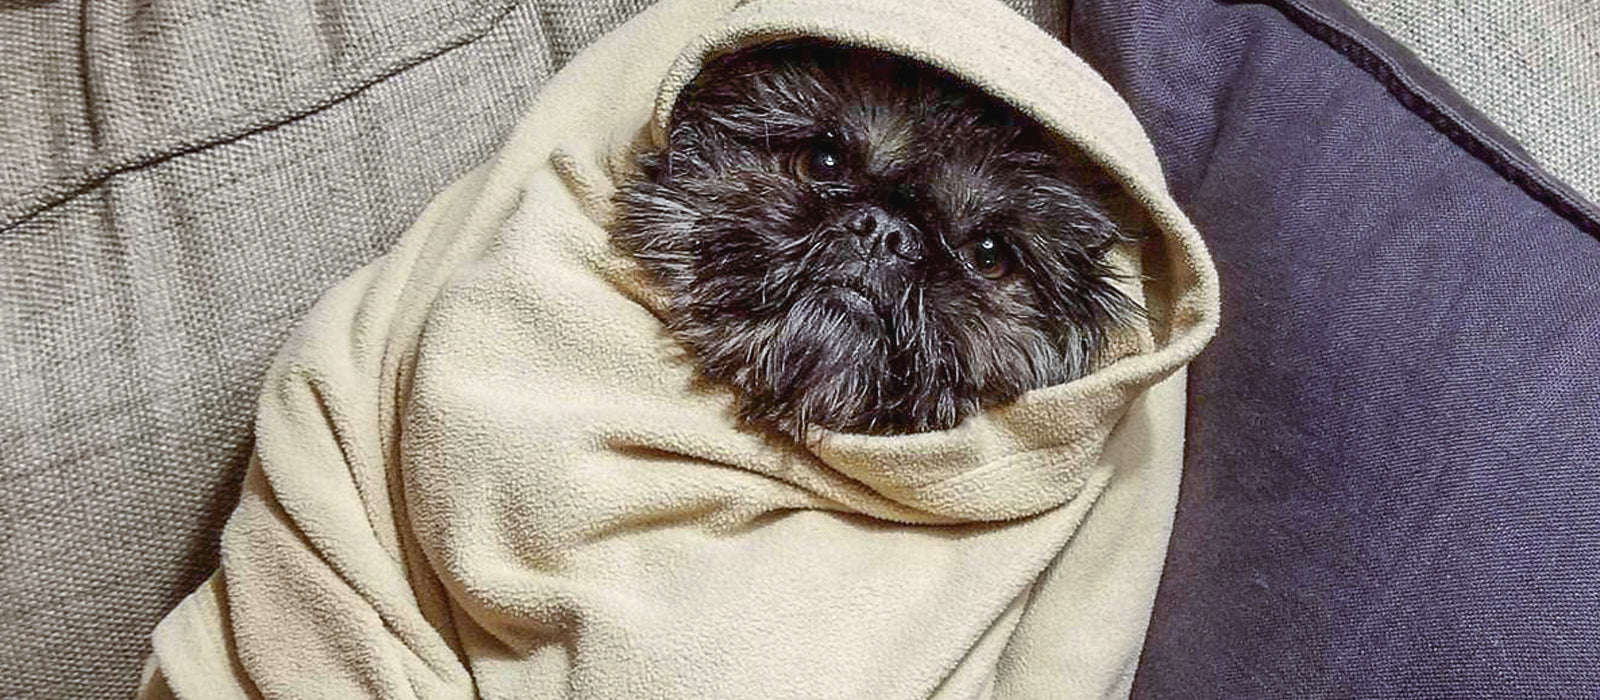 Seven Funniest Dogs In A Blanket SleepOvation